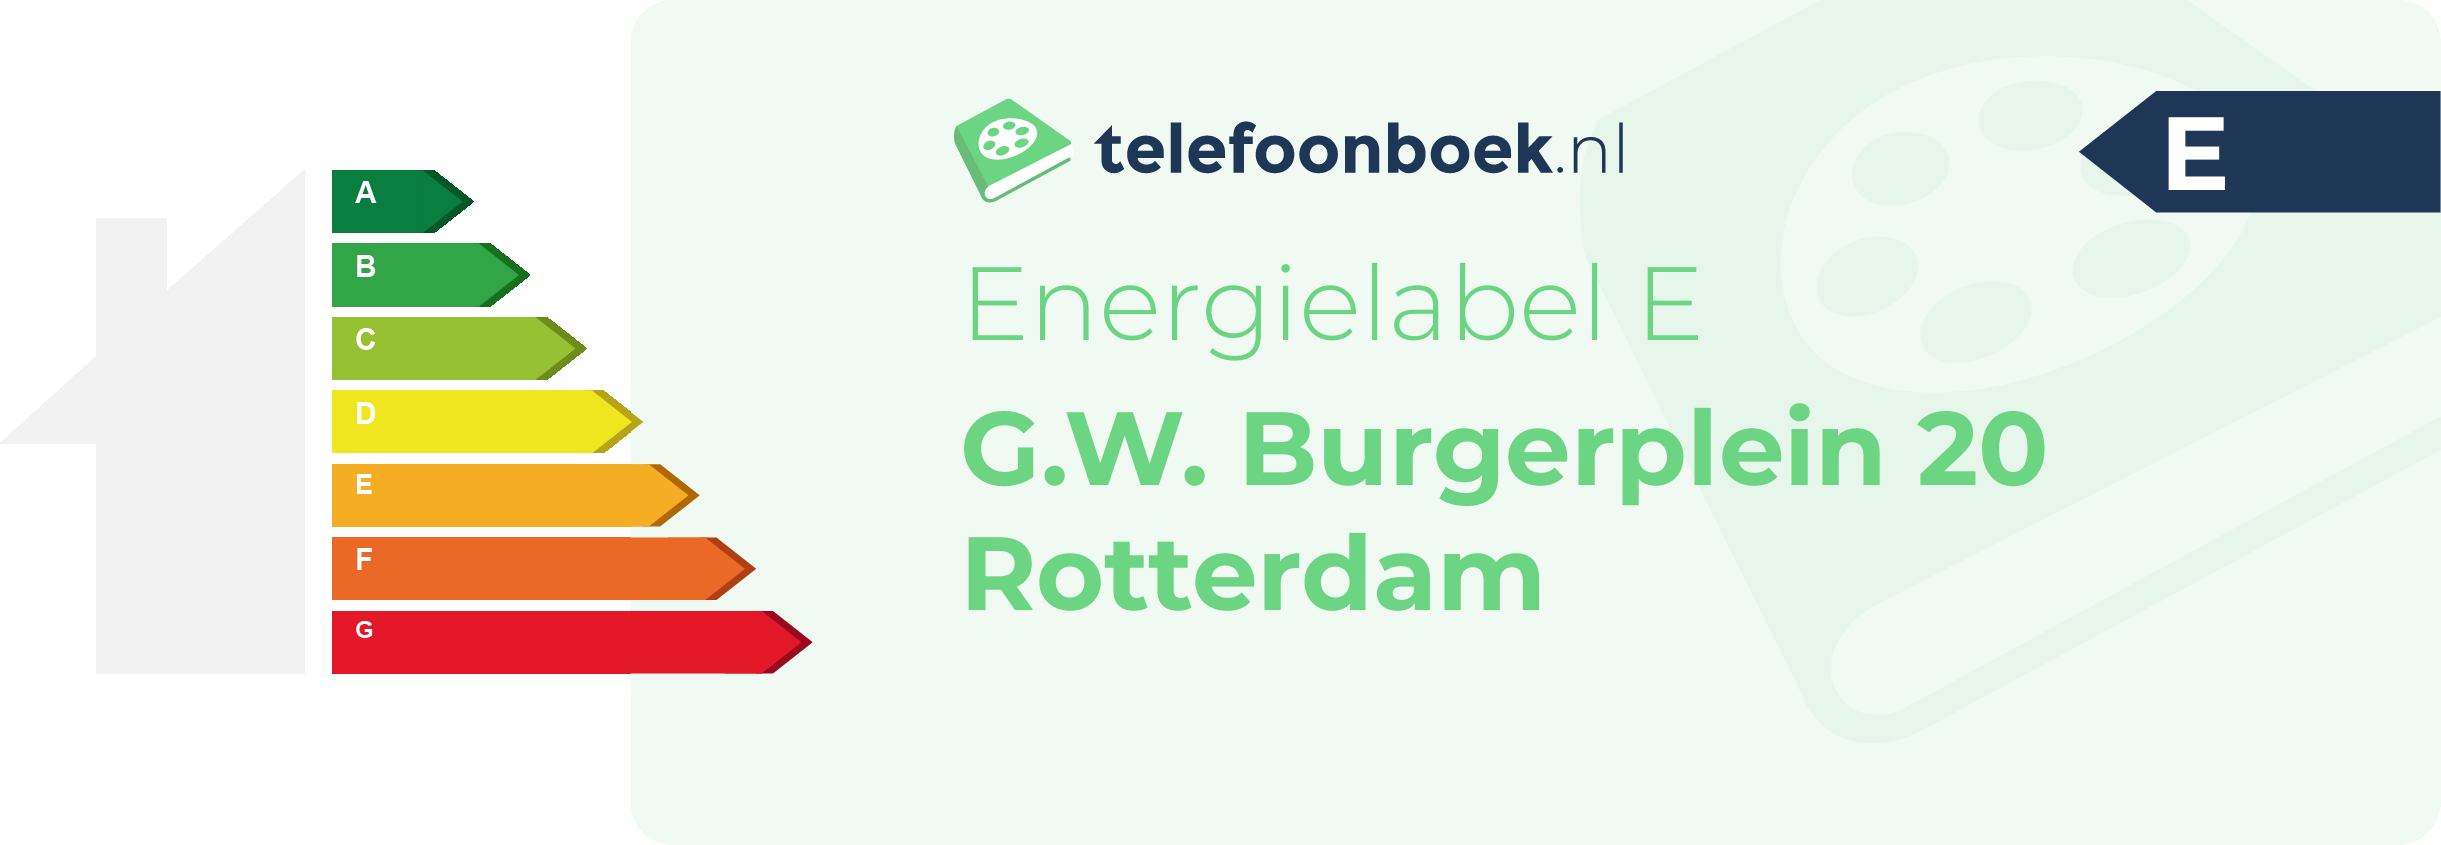 Energielabel G.W. Burgerplein 20 Rotterdam